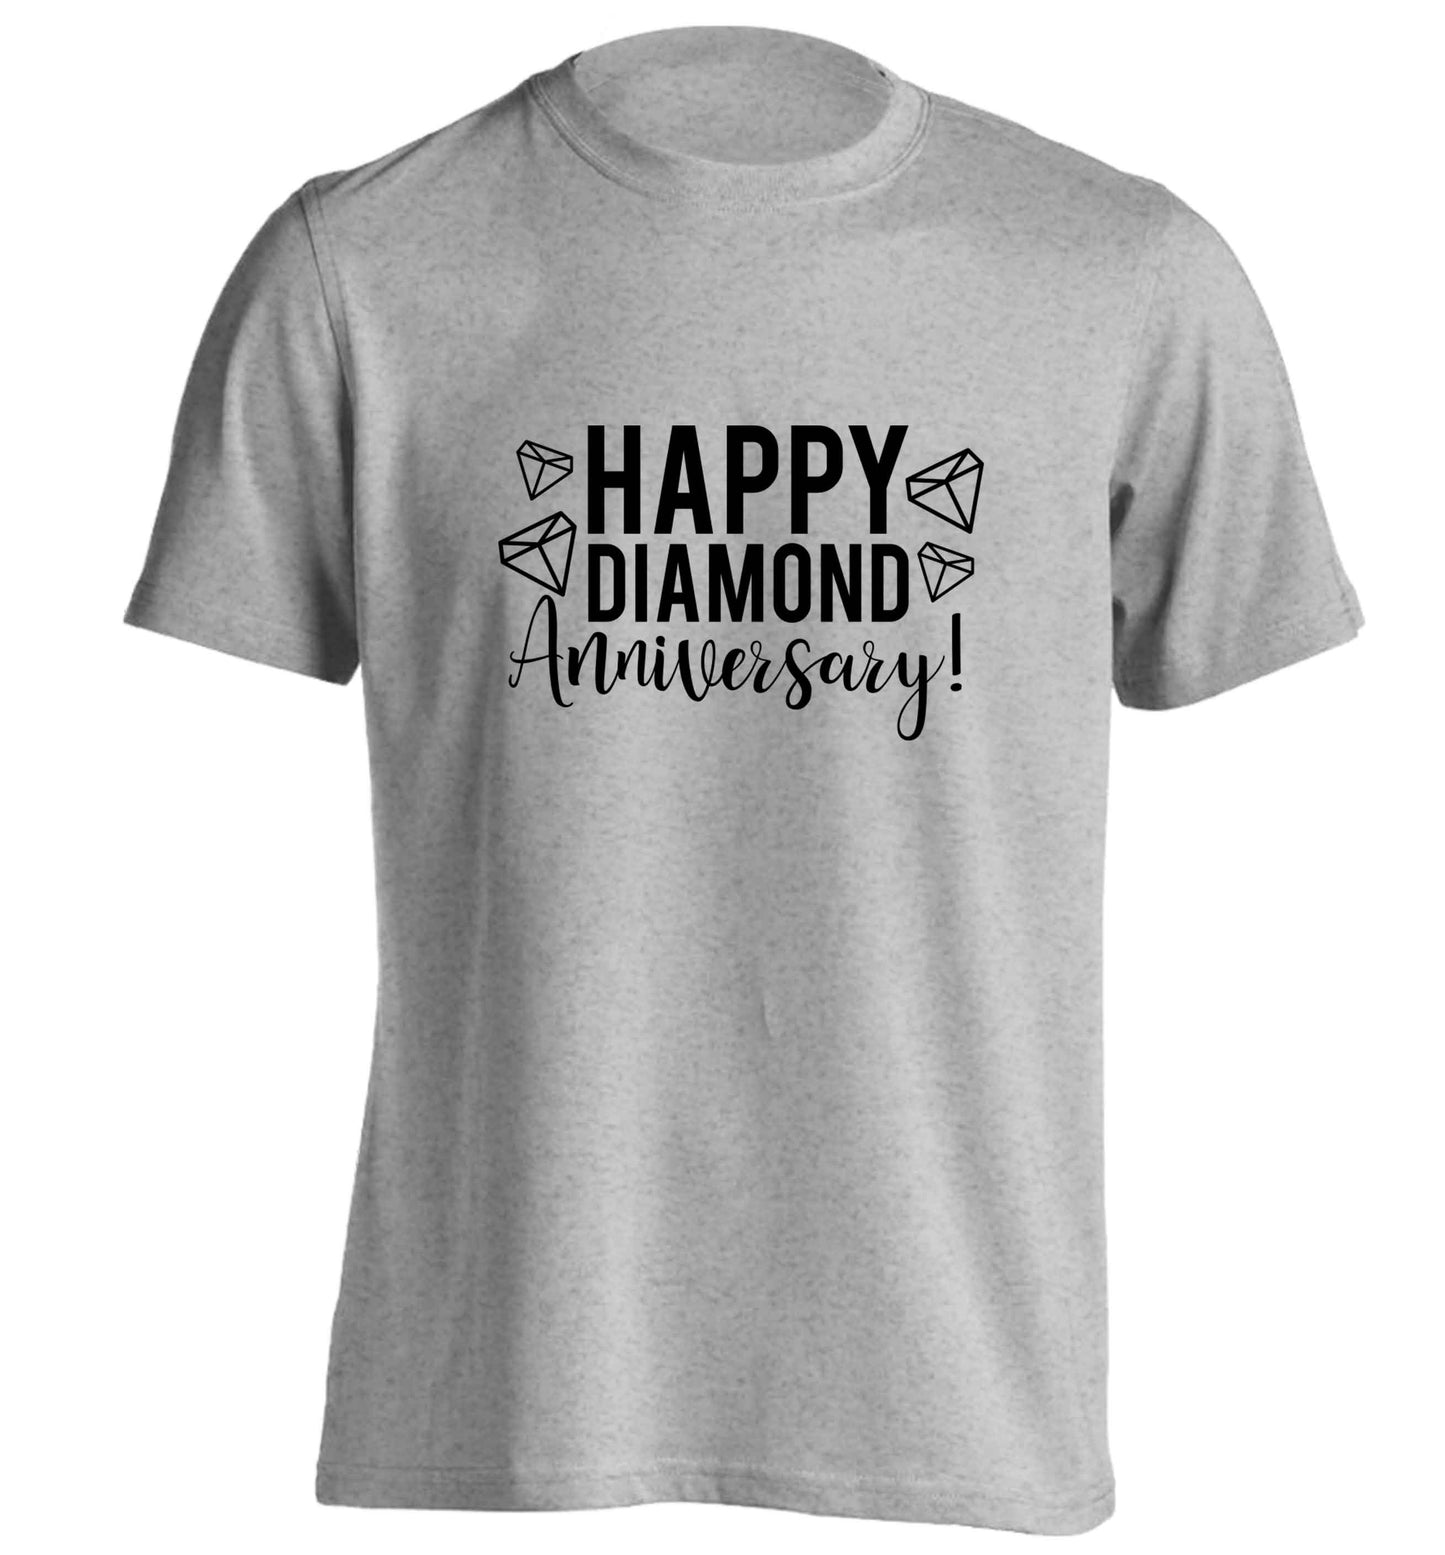 Happy diamond anniversary! adults unisex grey Tshirt 2XL